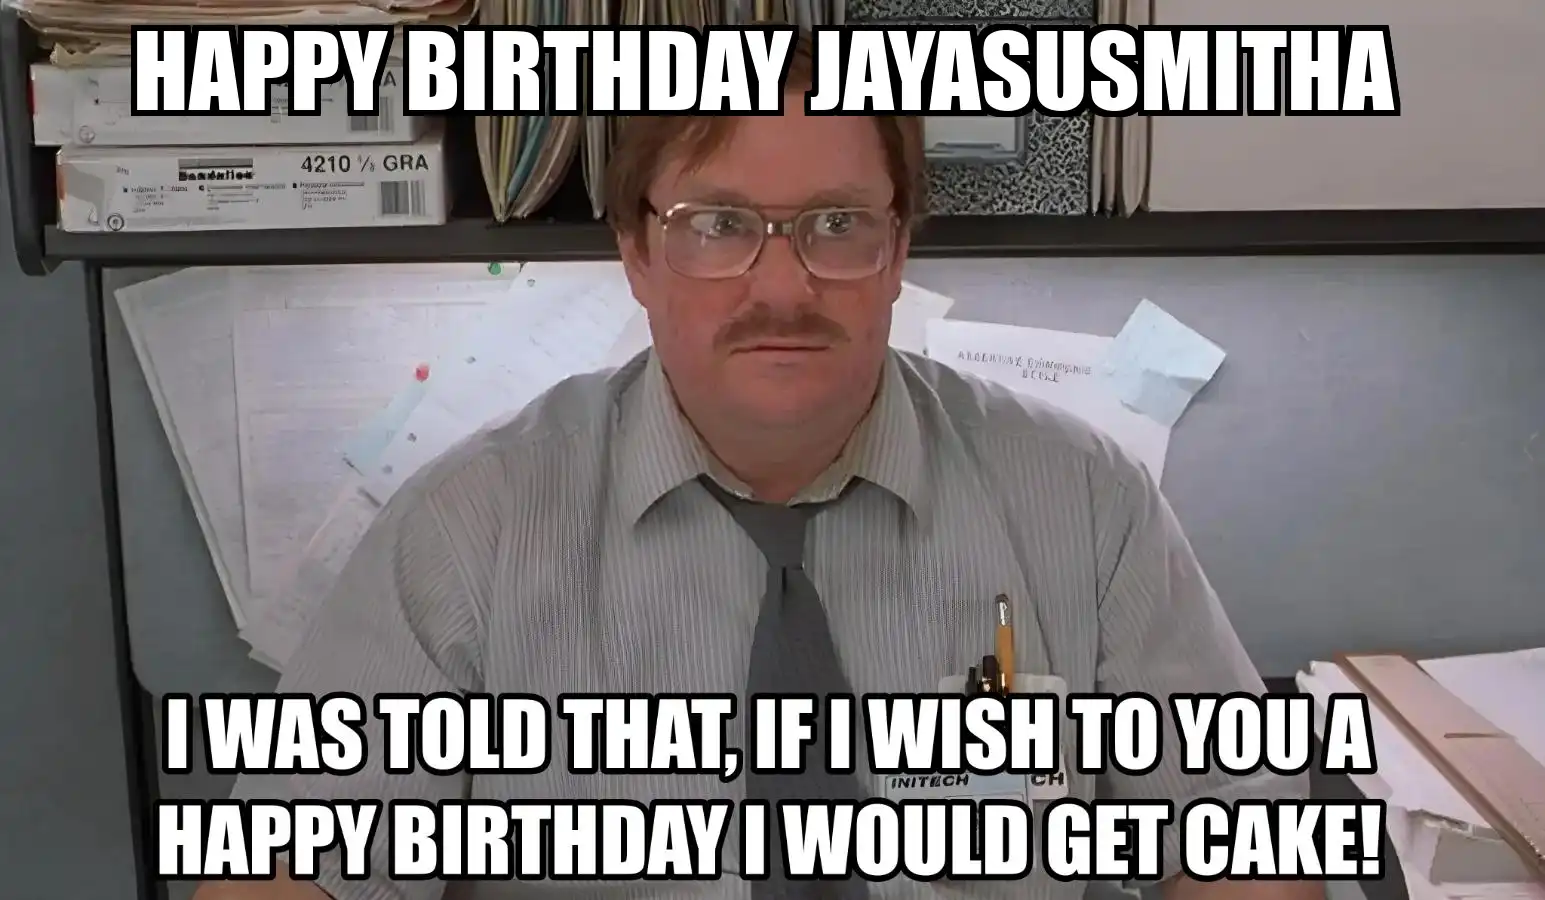 Happy Birthday Jayasusmitha I Would Get A Cake Meme